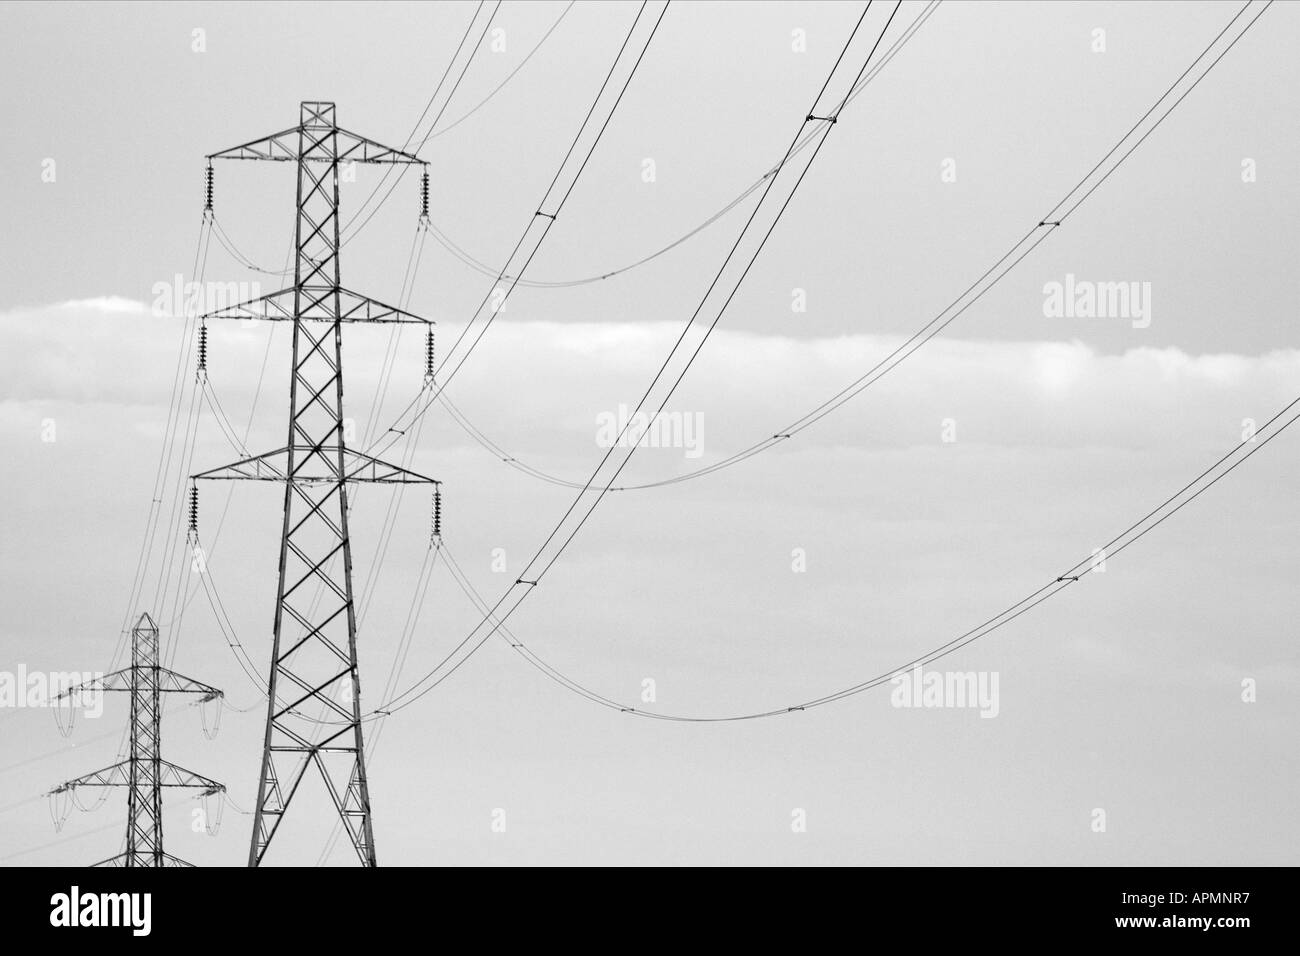 Radley electricity pylons 3 bw Stock Photo